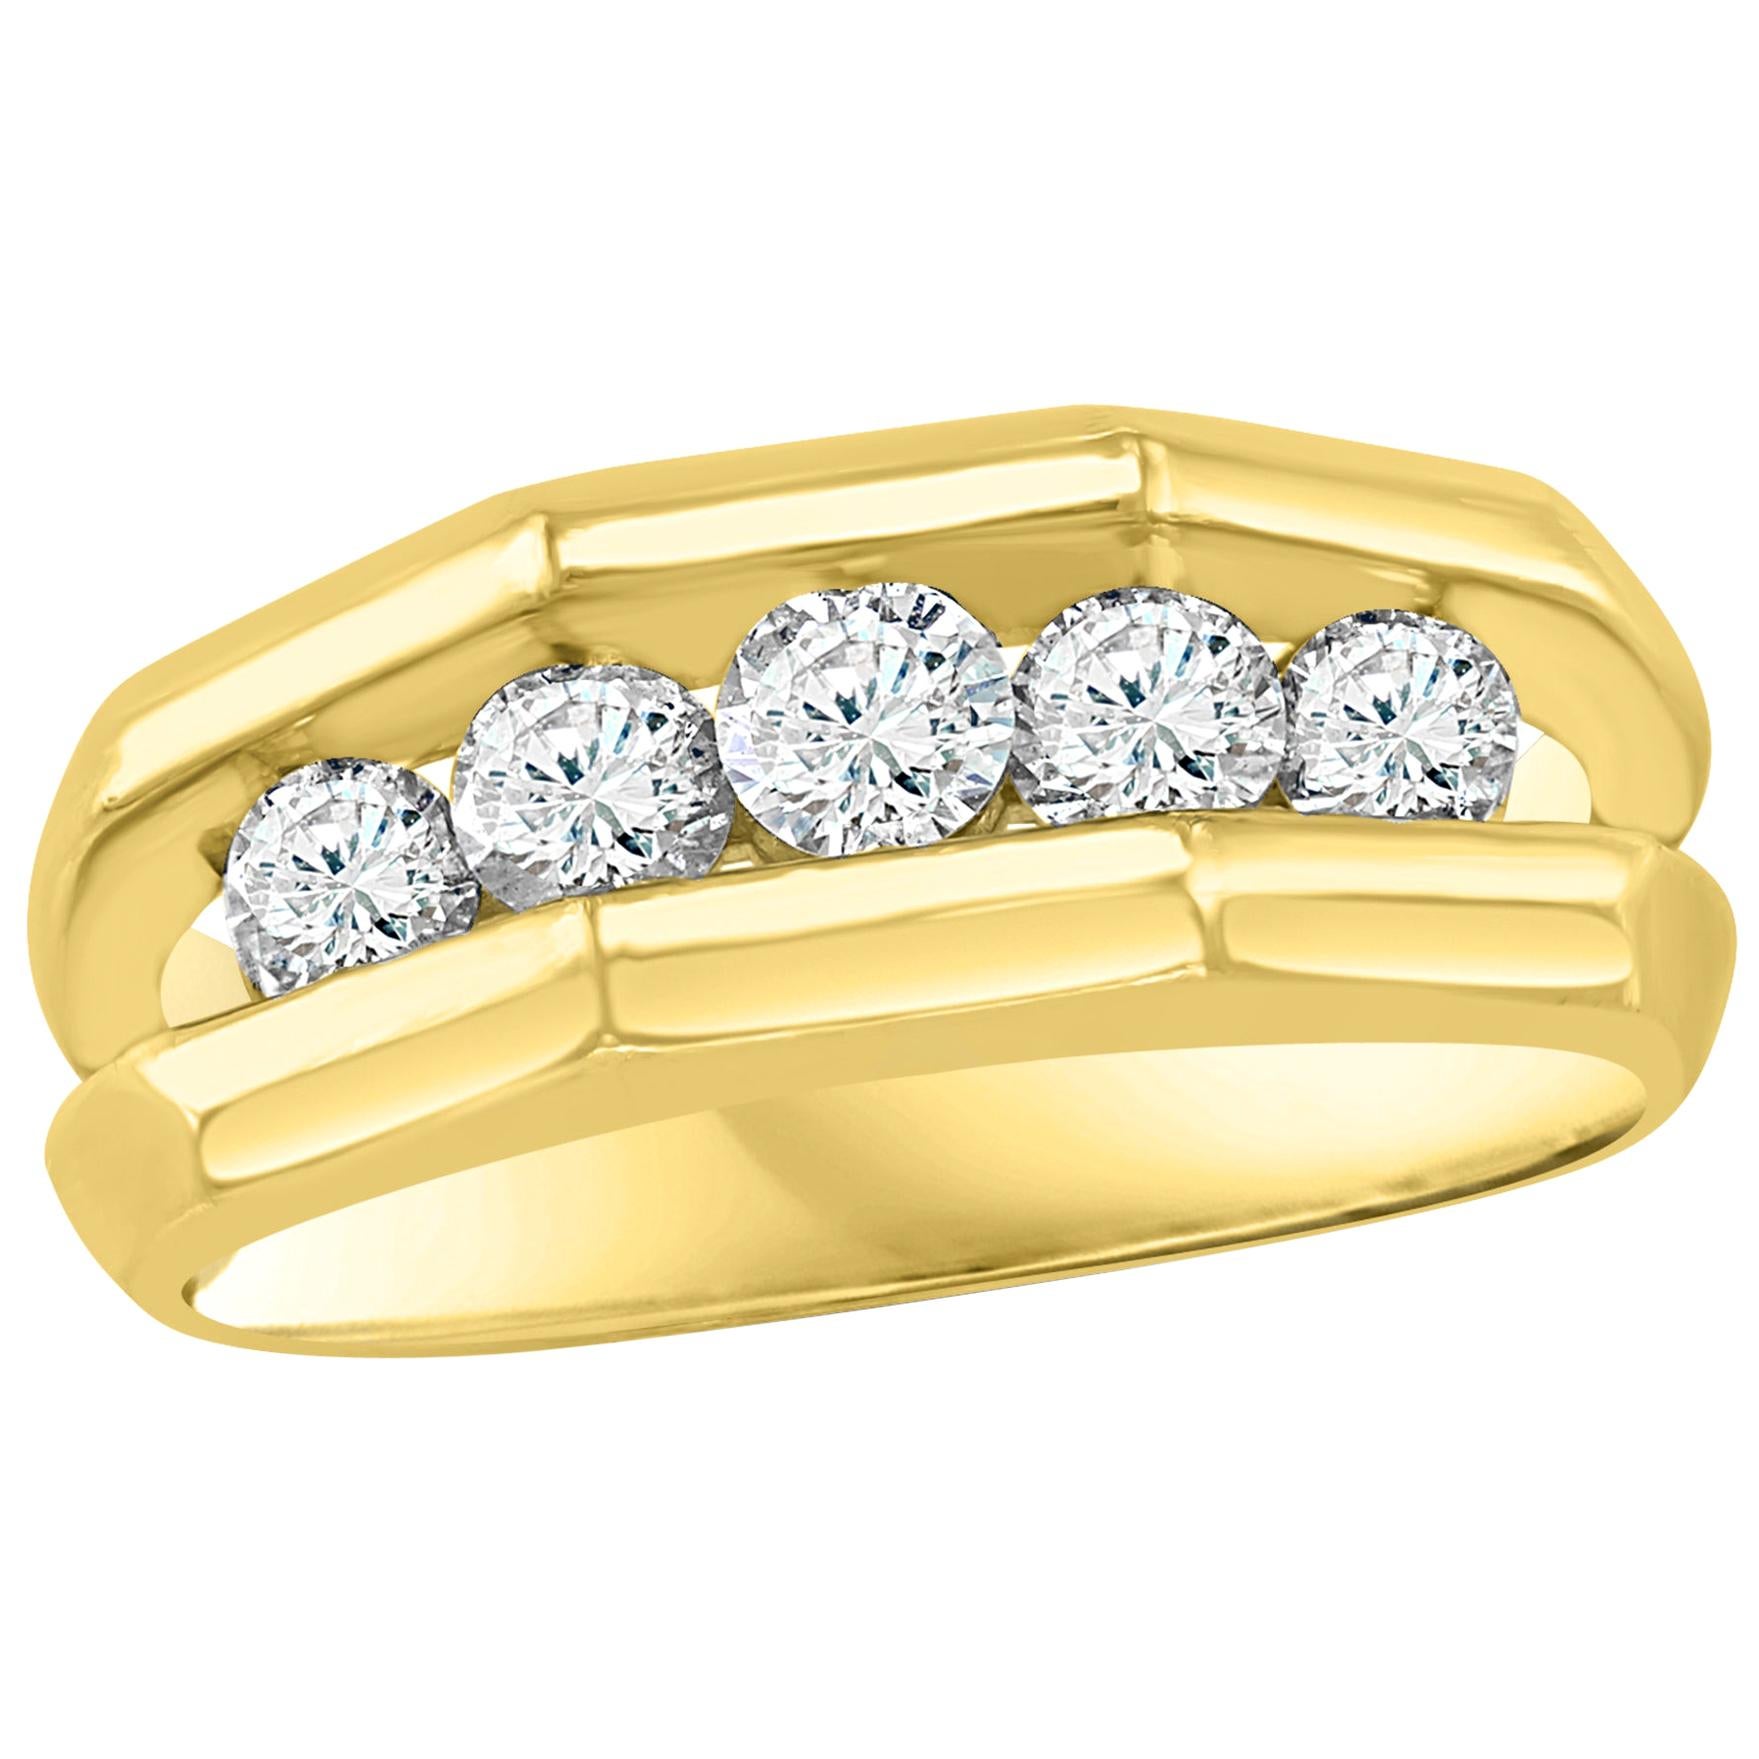 5 Diamonds, 1 Carat Unisex 1-Row Diamond Band Ring in 14 Karat Yellow Gold